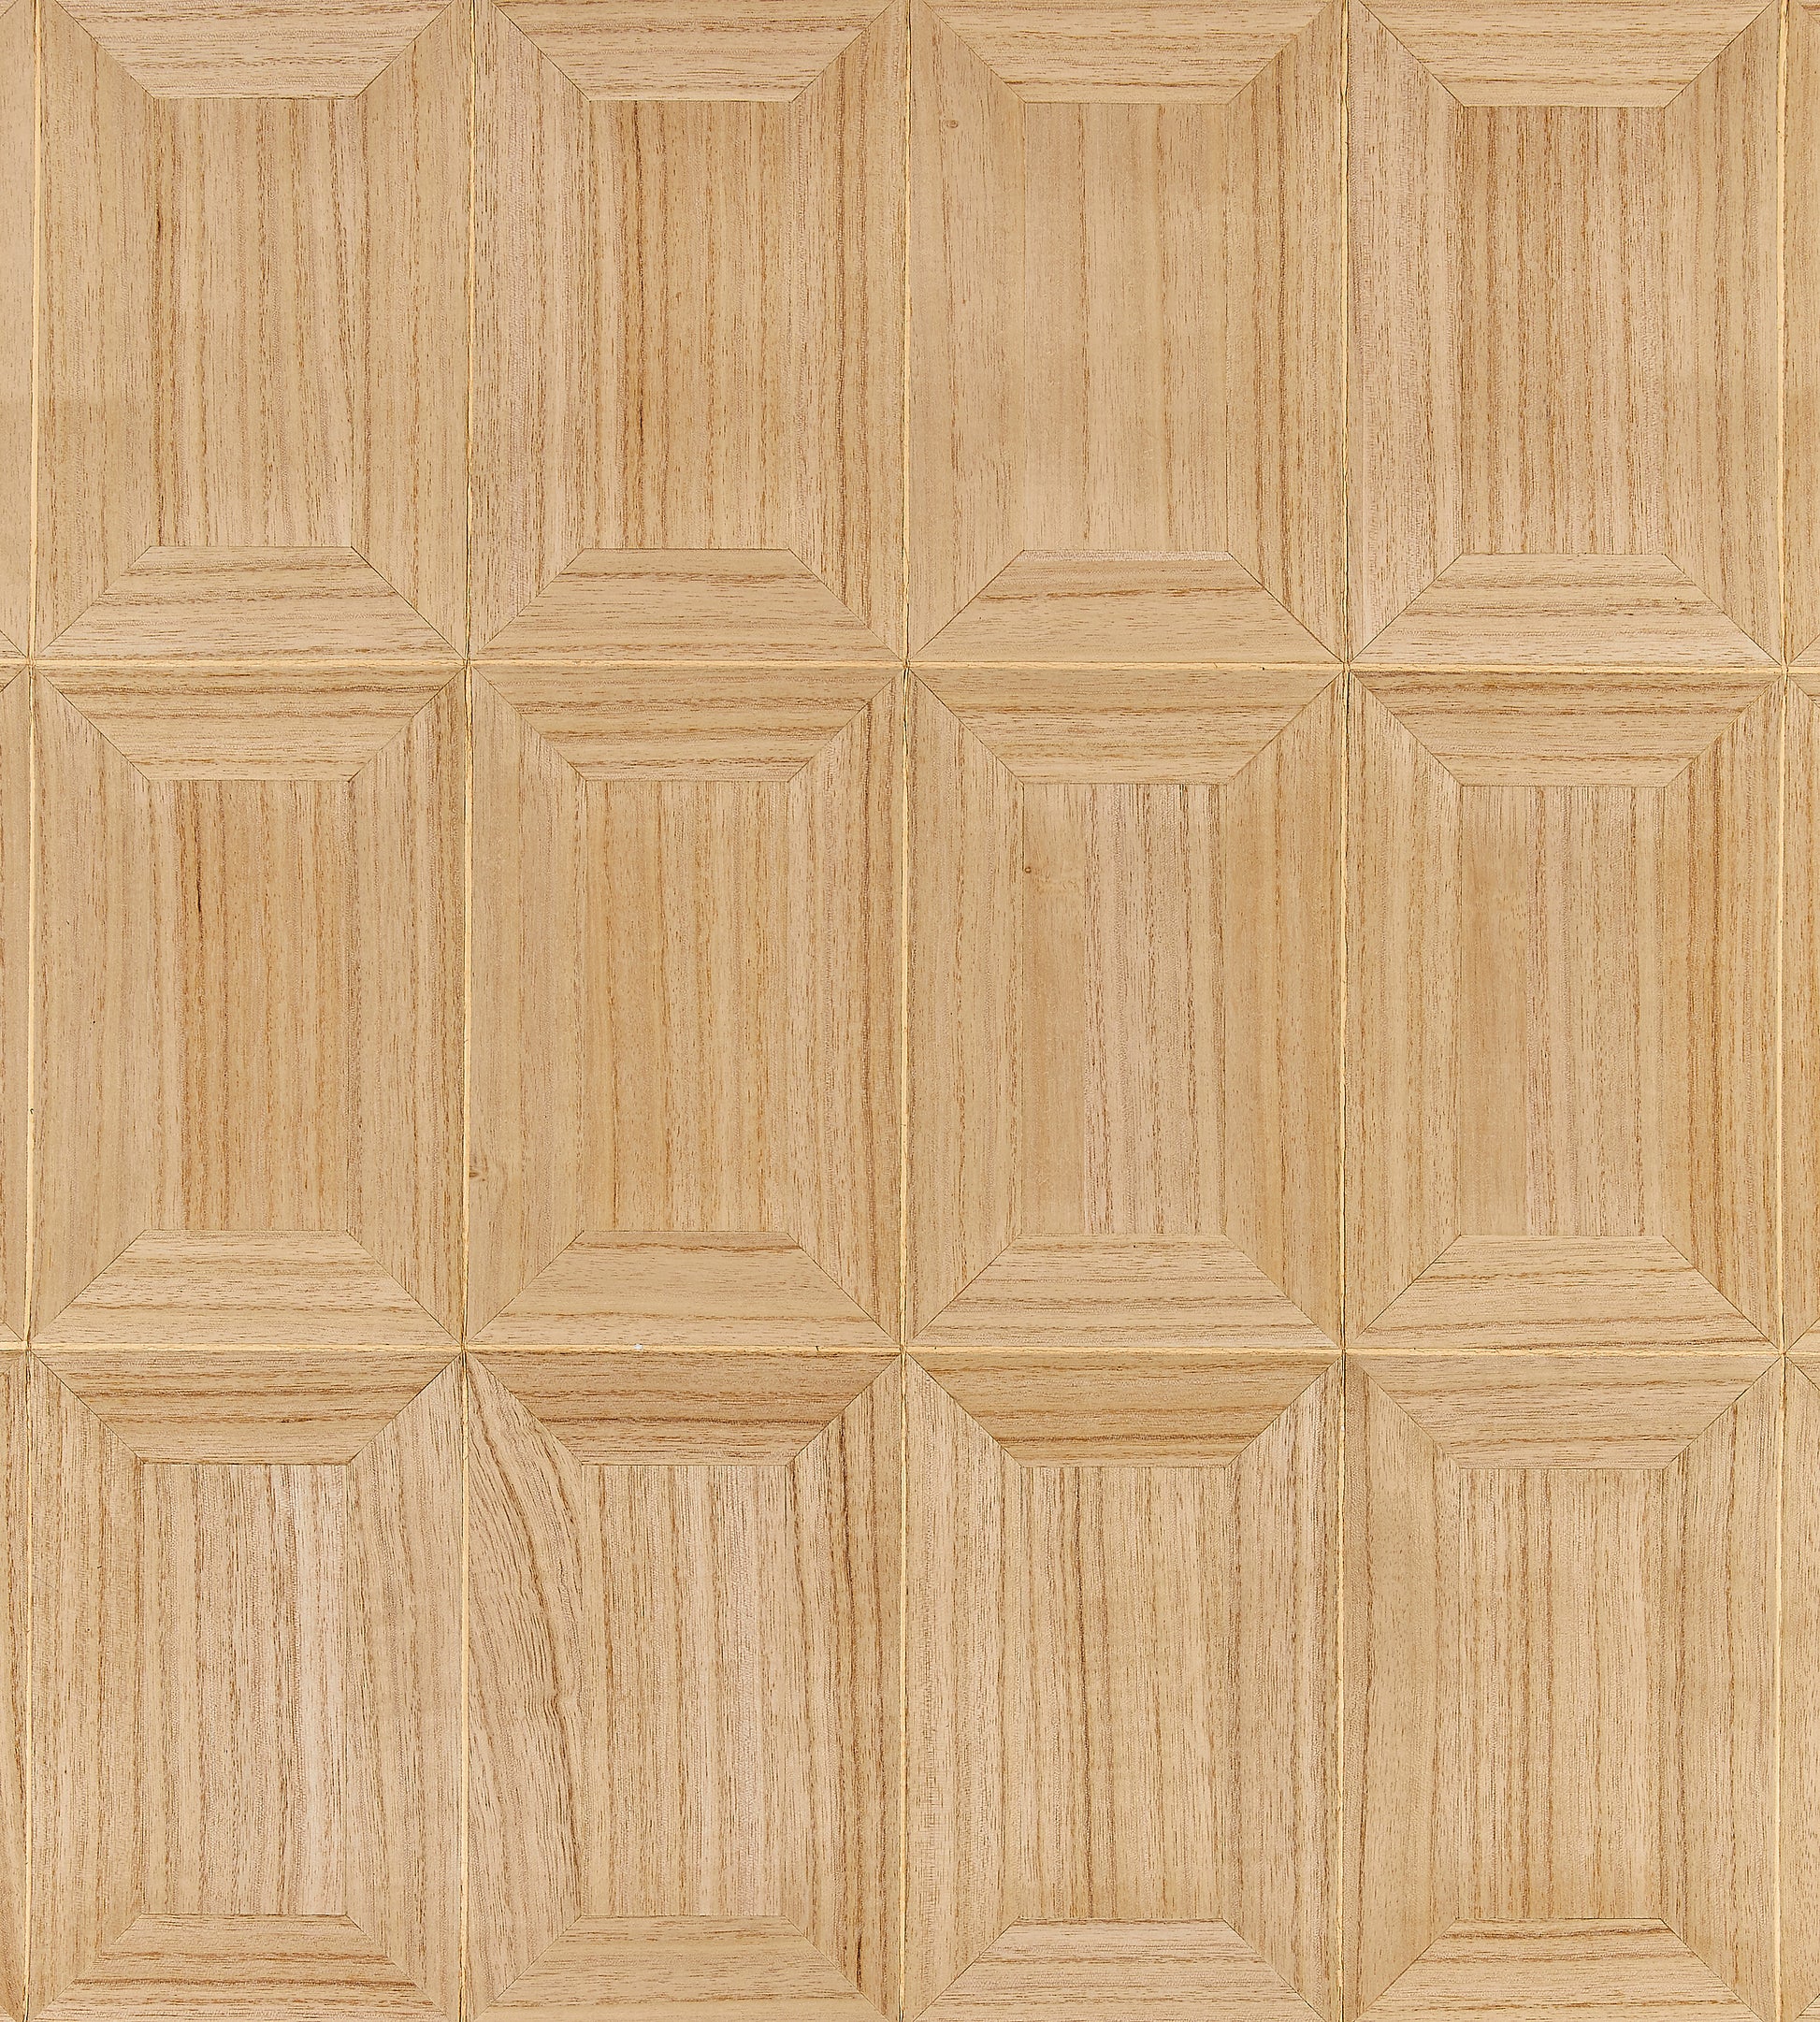 Acquire Scalamandre Wallpaper Pattern Sc 0001Wp88475 Name Libro - Wood Maple Geometric|Plaid Wallpaper